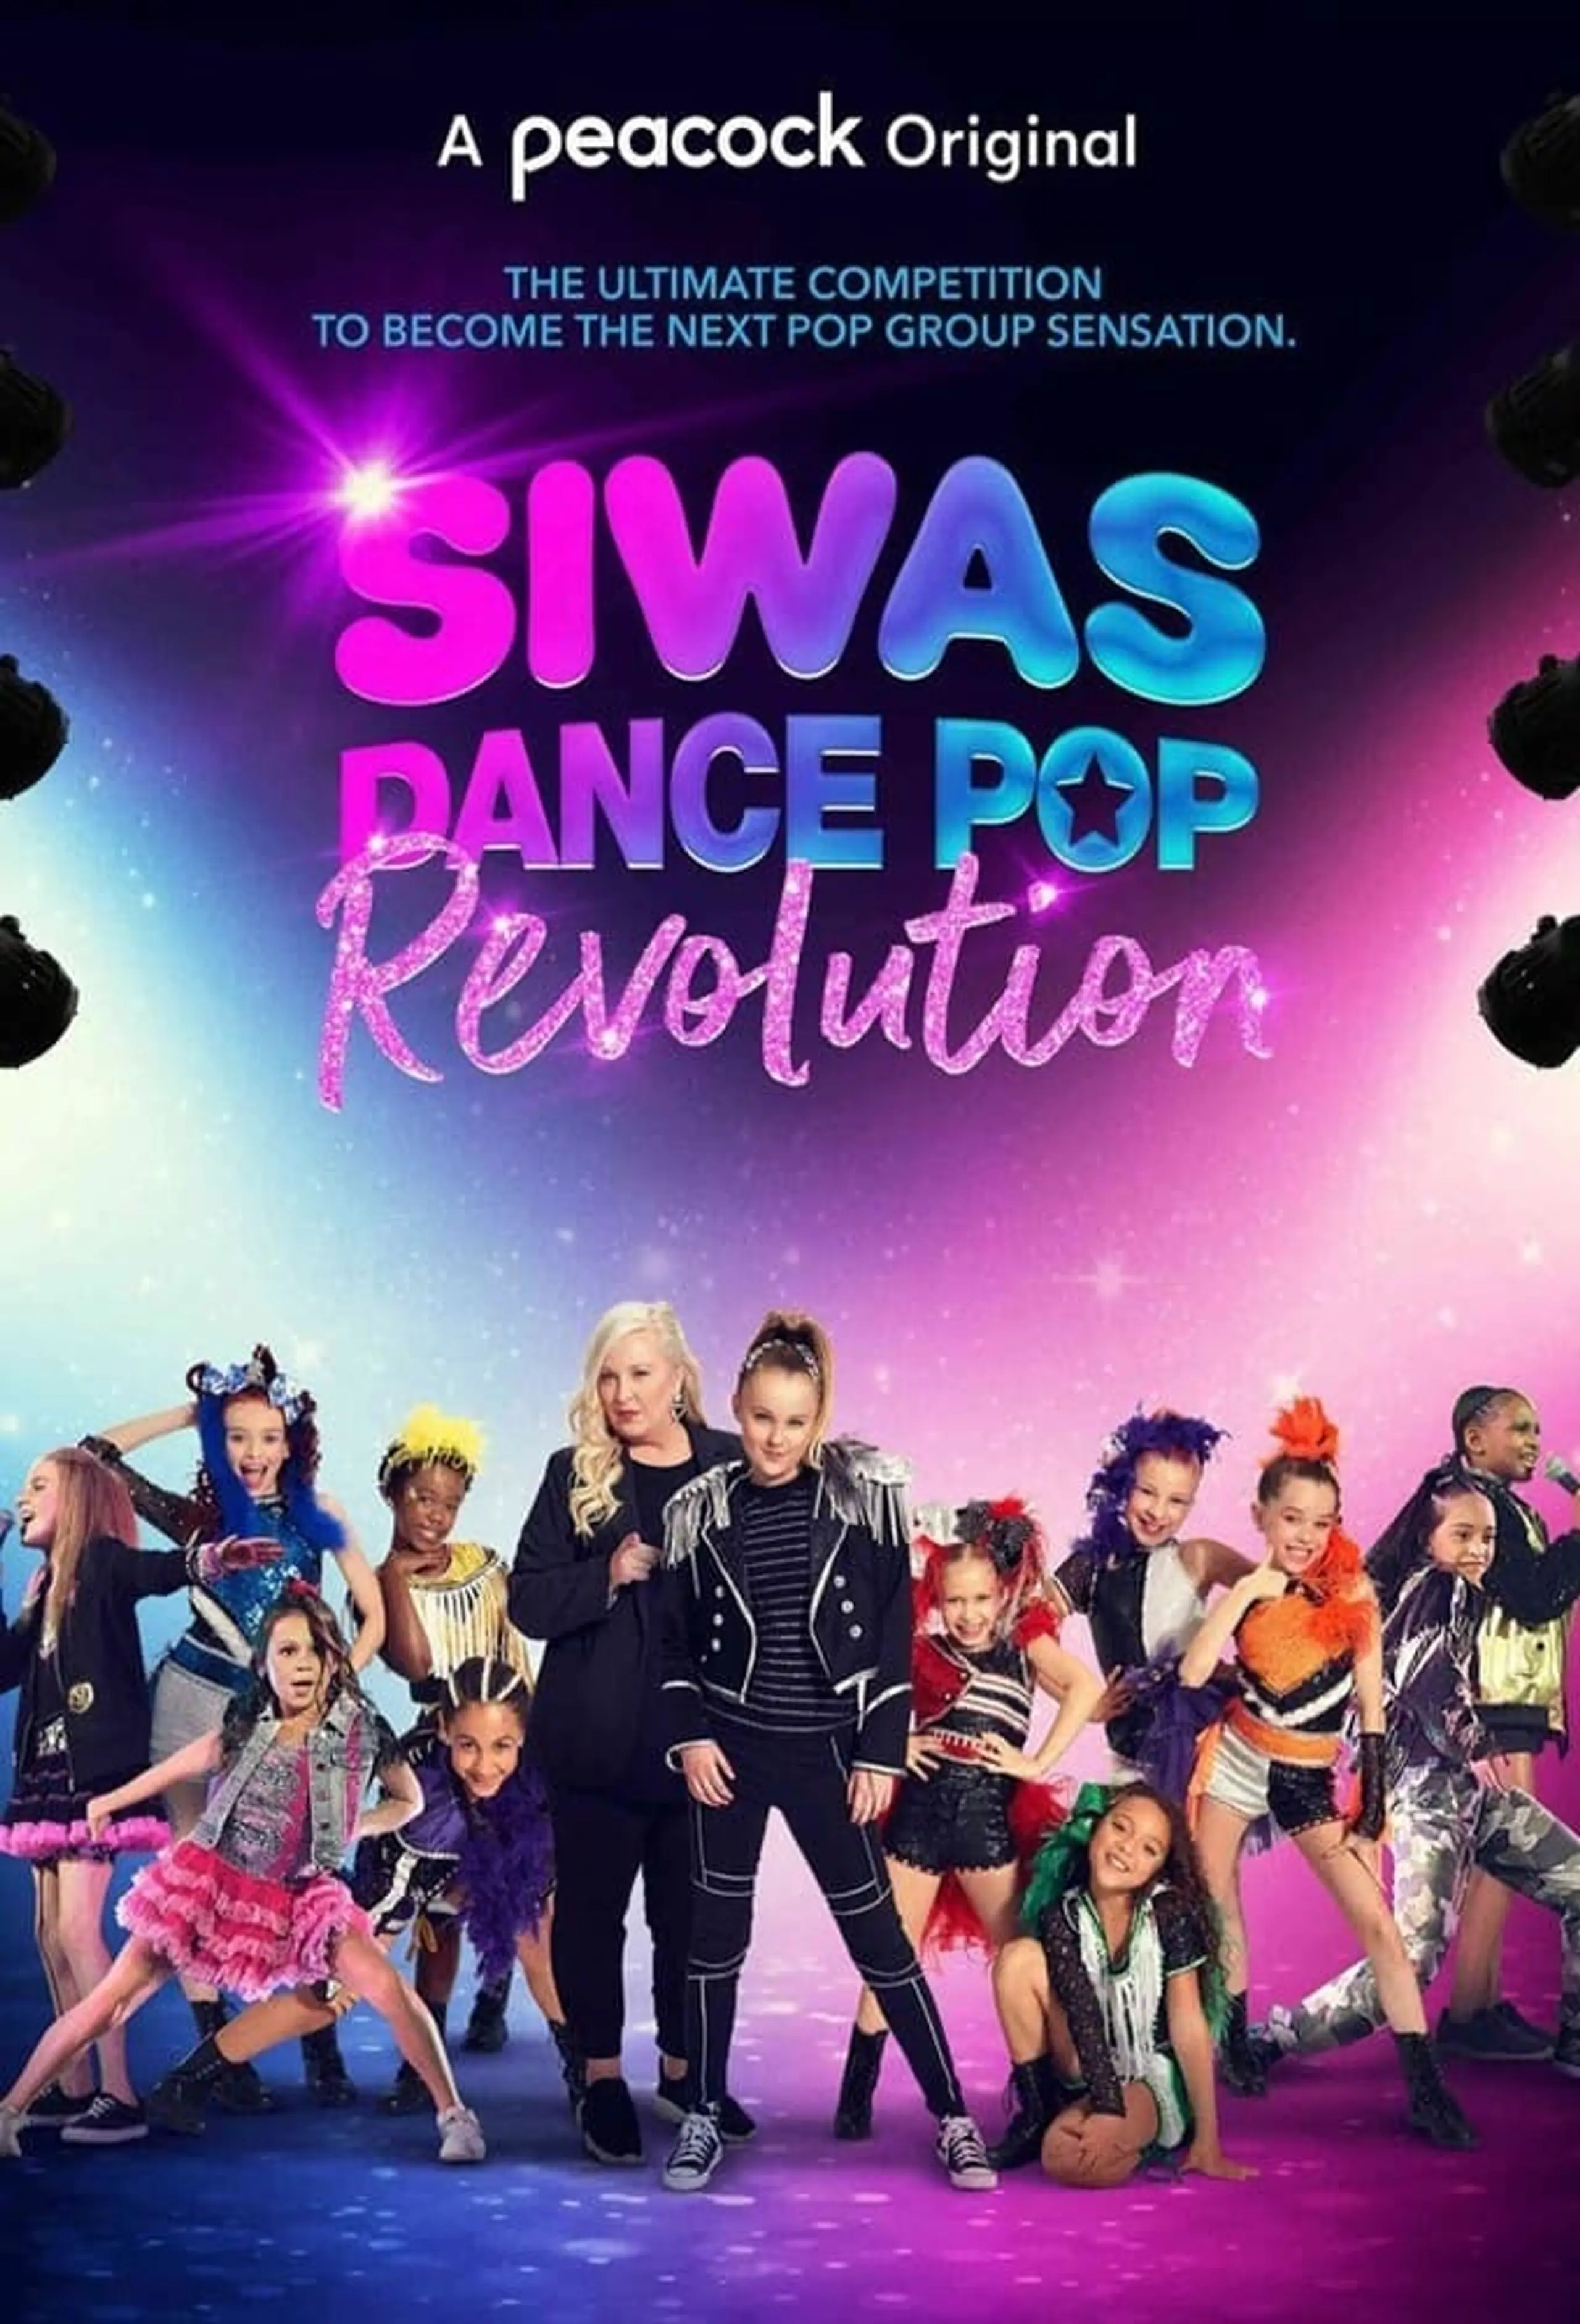 Siwas Dance Pop Revolution